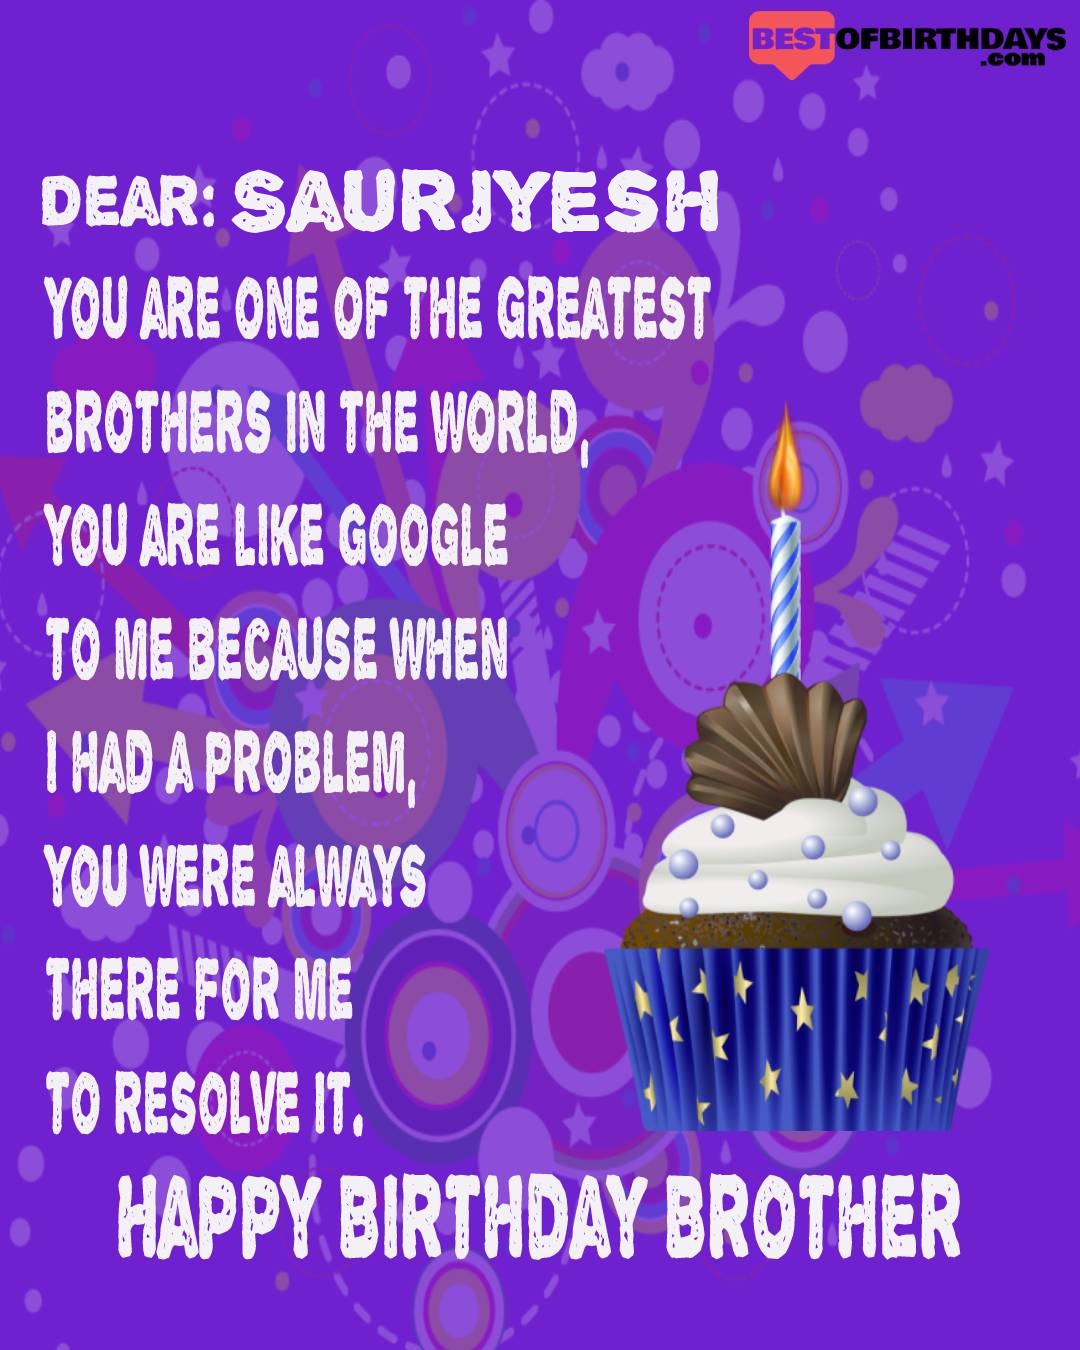 Happy birthday saurjyesh bhai brother bro